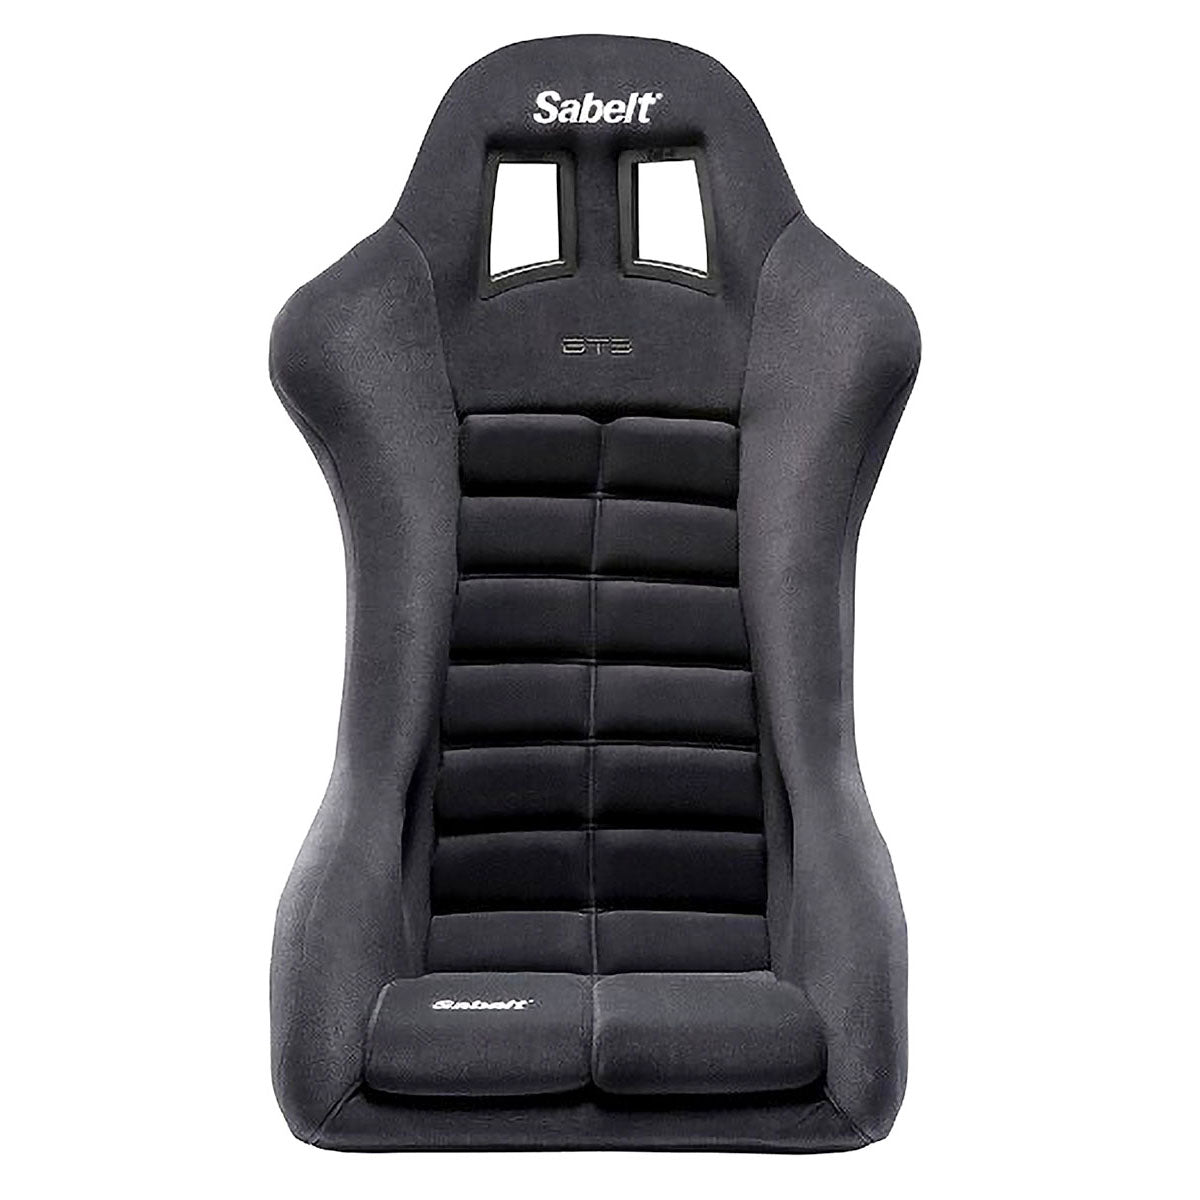 Sabelt GT3 Racing Seat